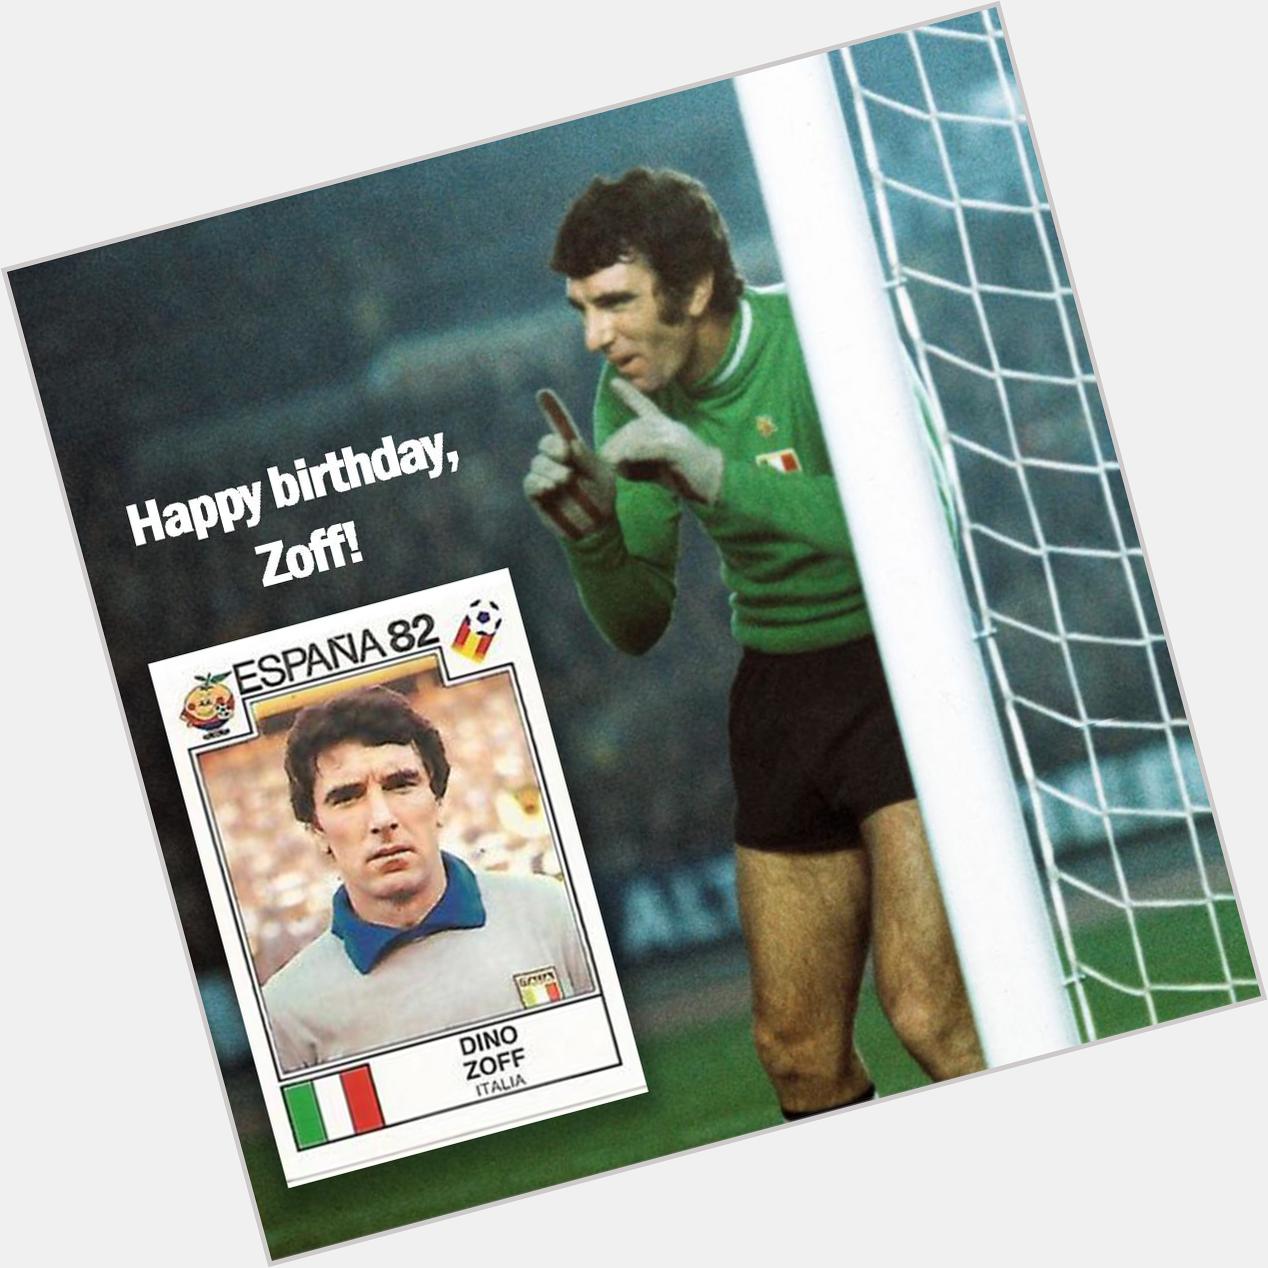 Happy birthday, Dino Zoff!!! Legendary goalkeeper of Italy! 